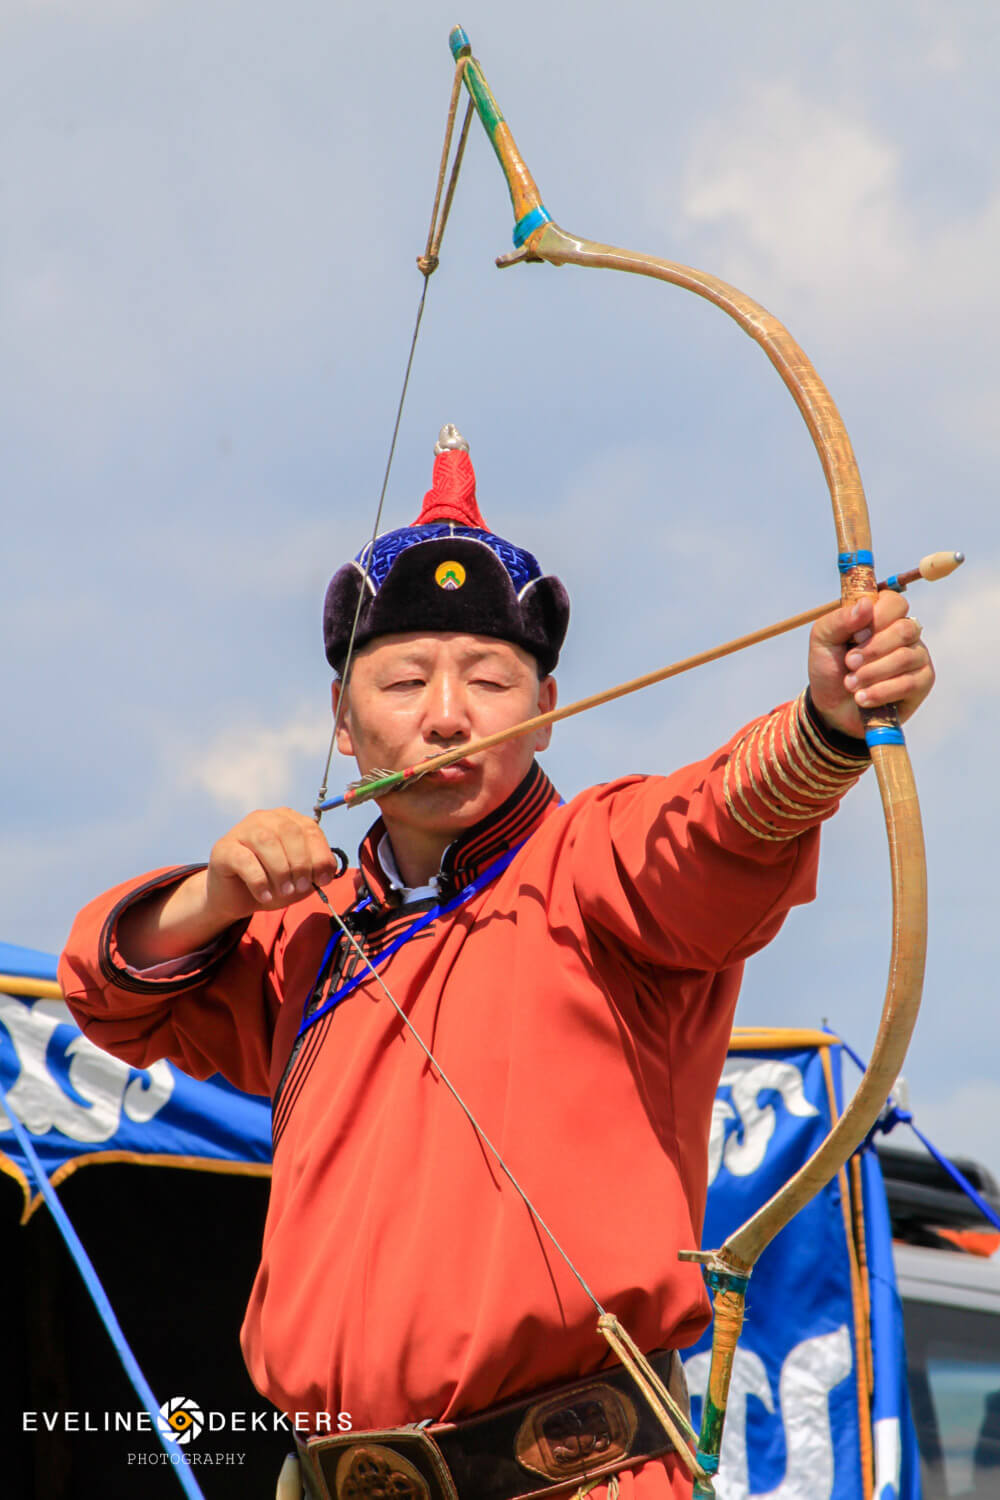 Archery at Naadam Festival